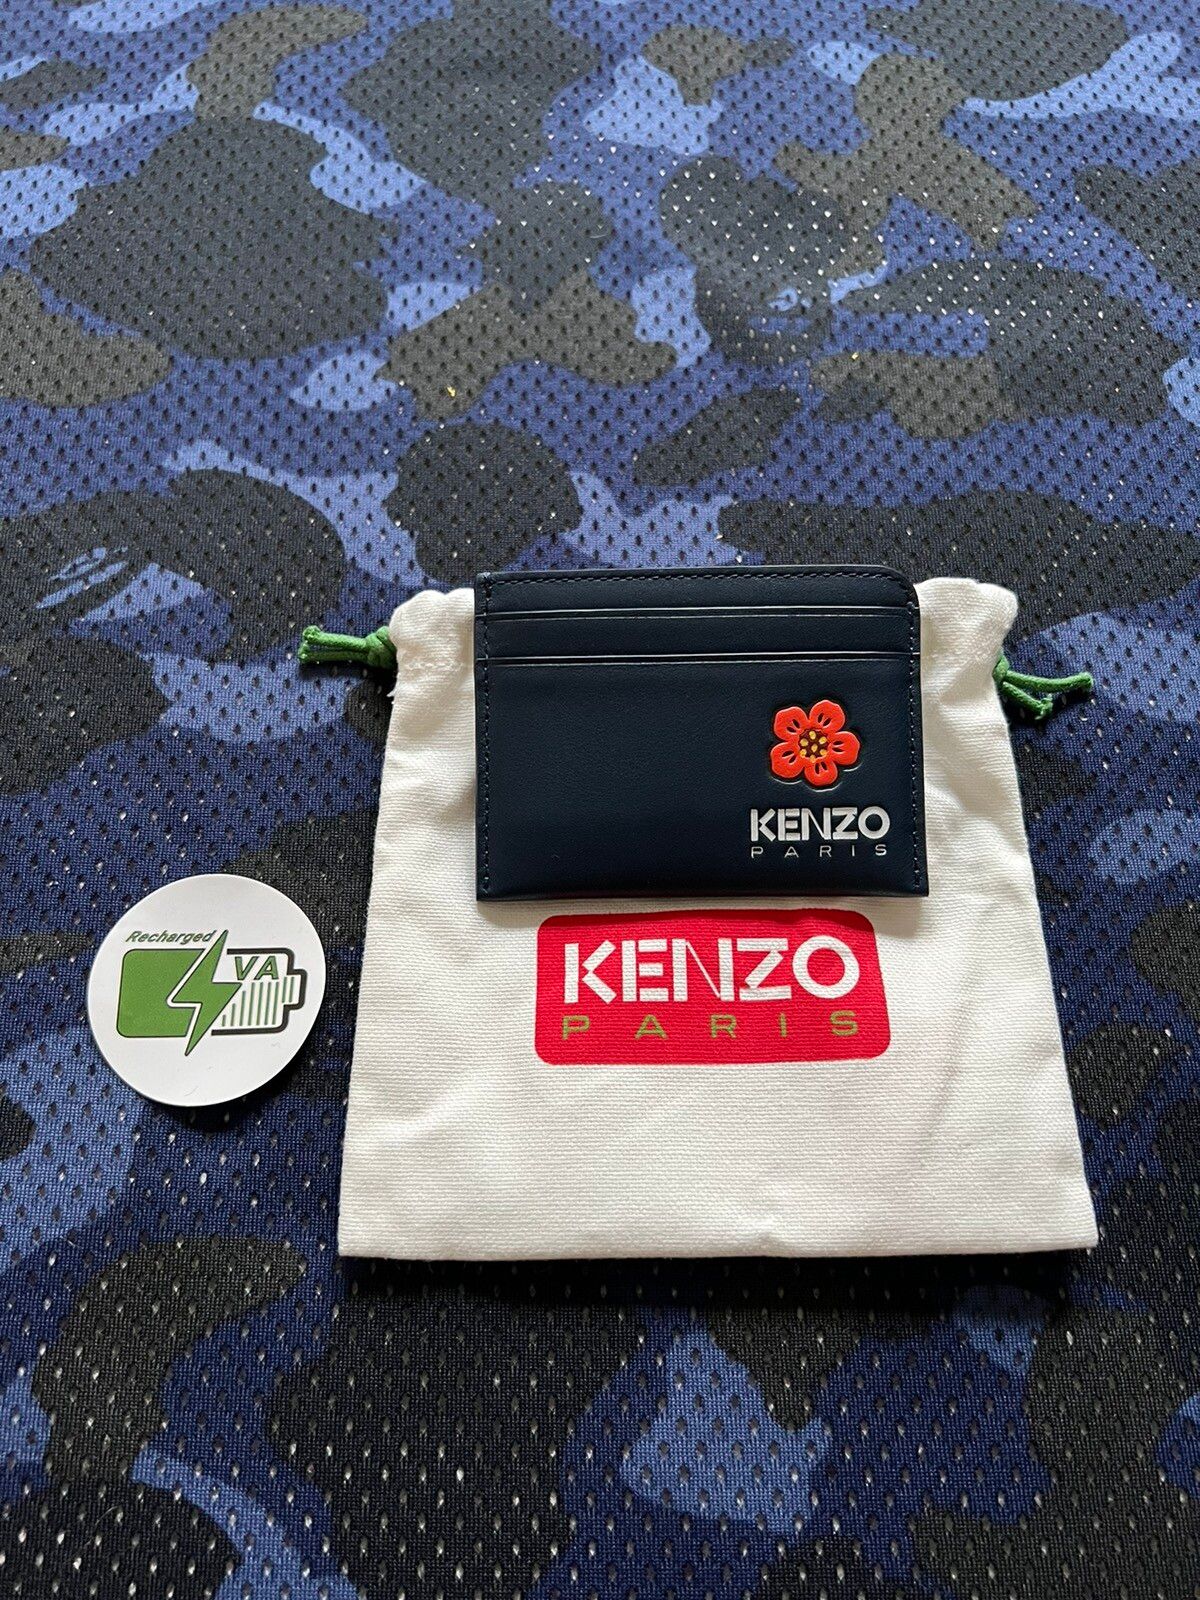 Pre-owned Kenzo 100% Authentic  Paris Nigo Flower Boke Navy Card Holder